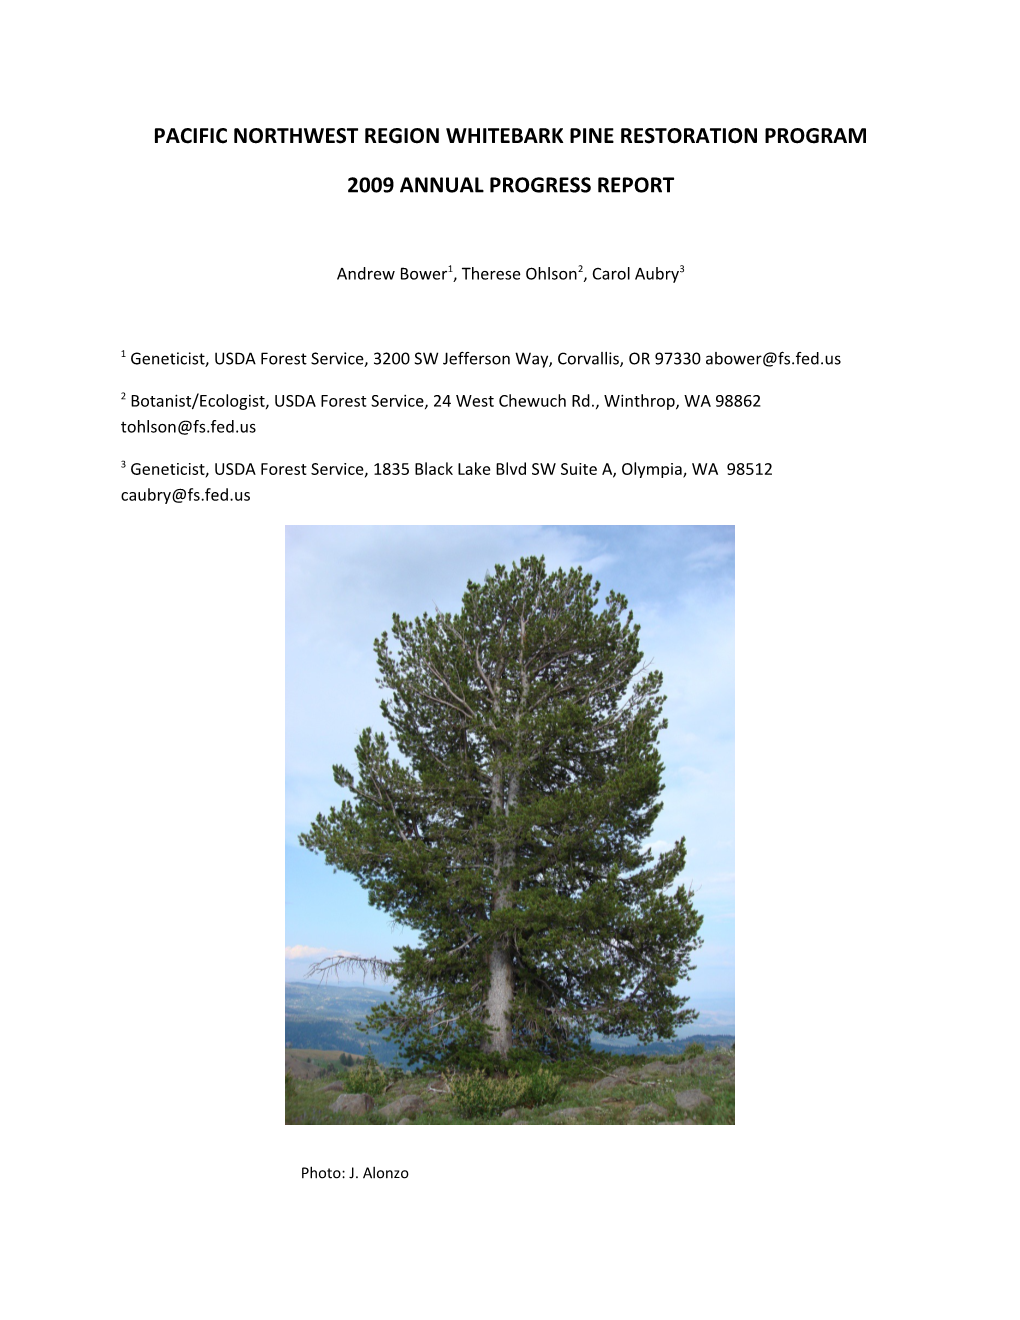 Pacific Northwest Region Whitebark Pine Restoration Program